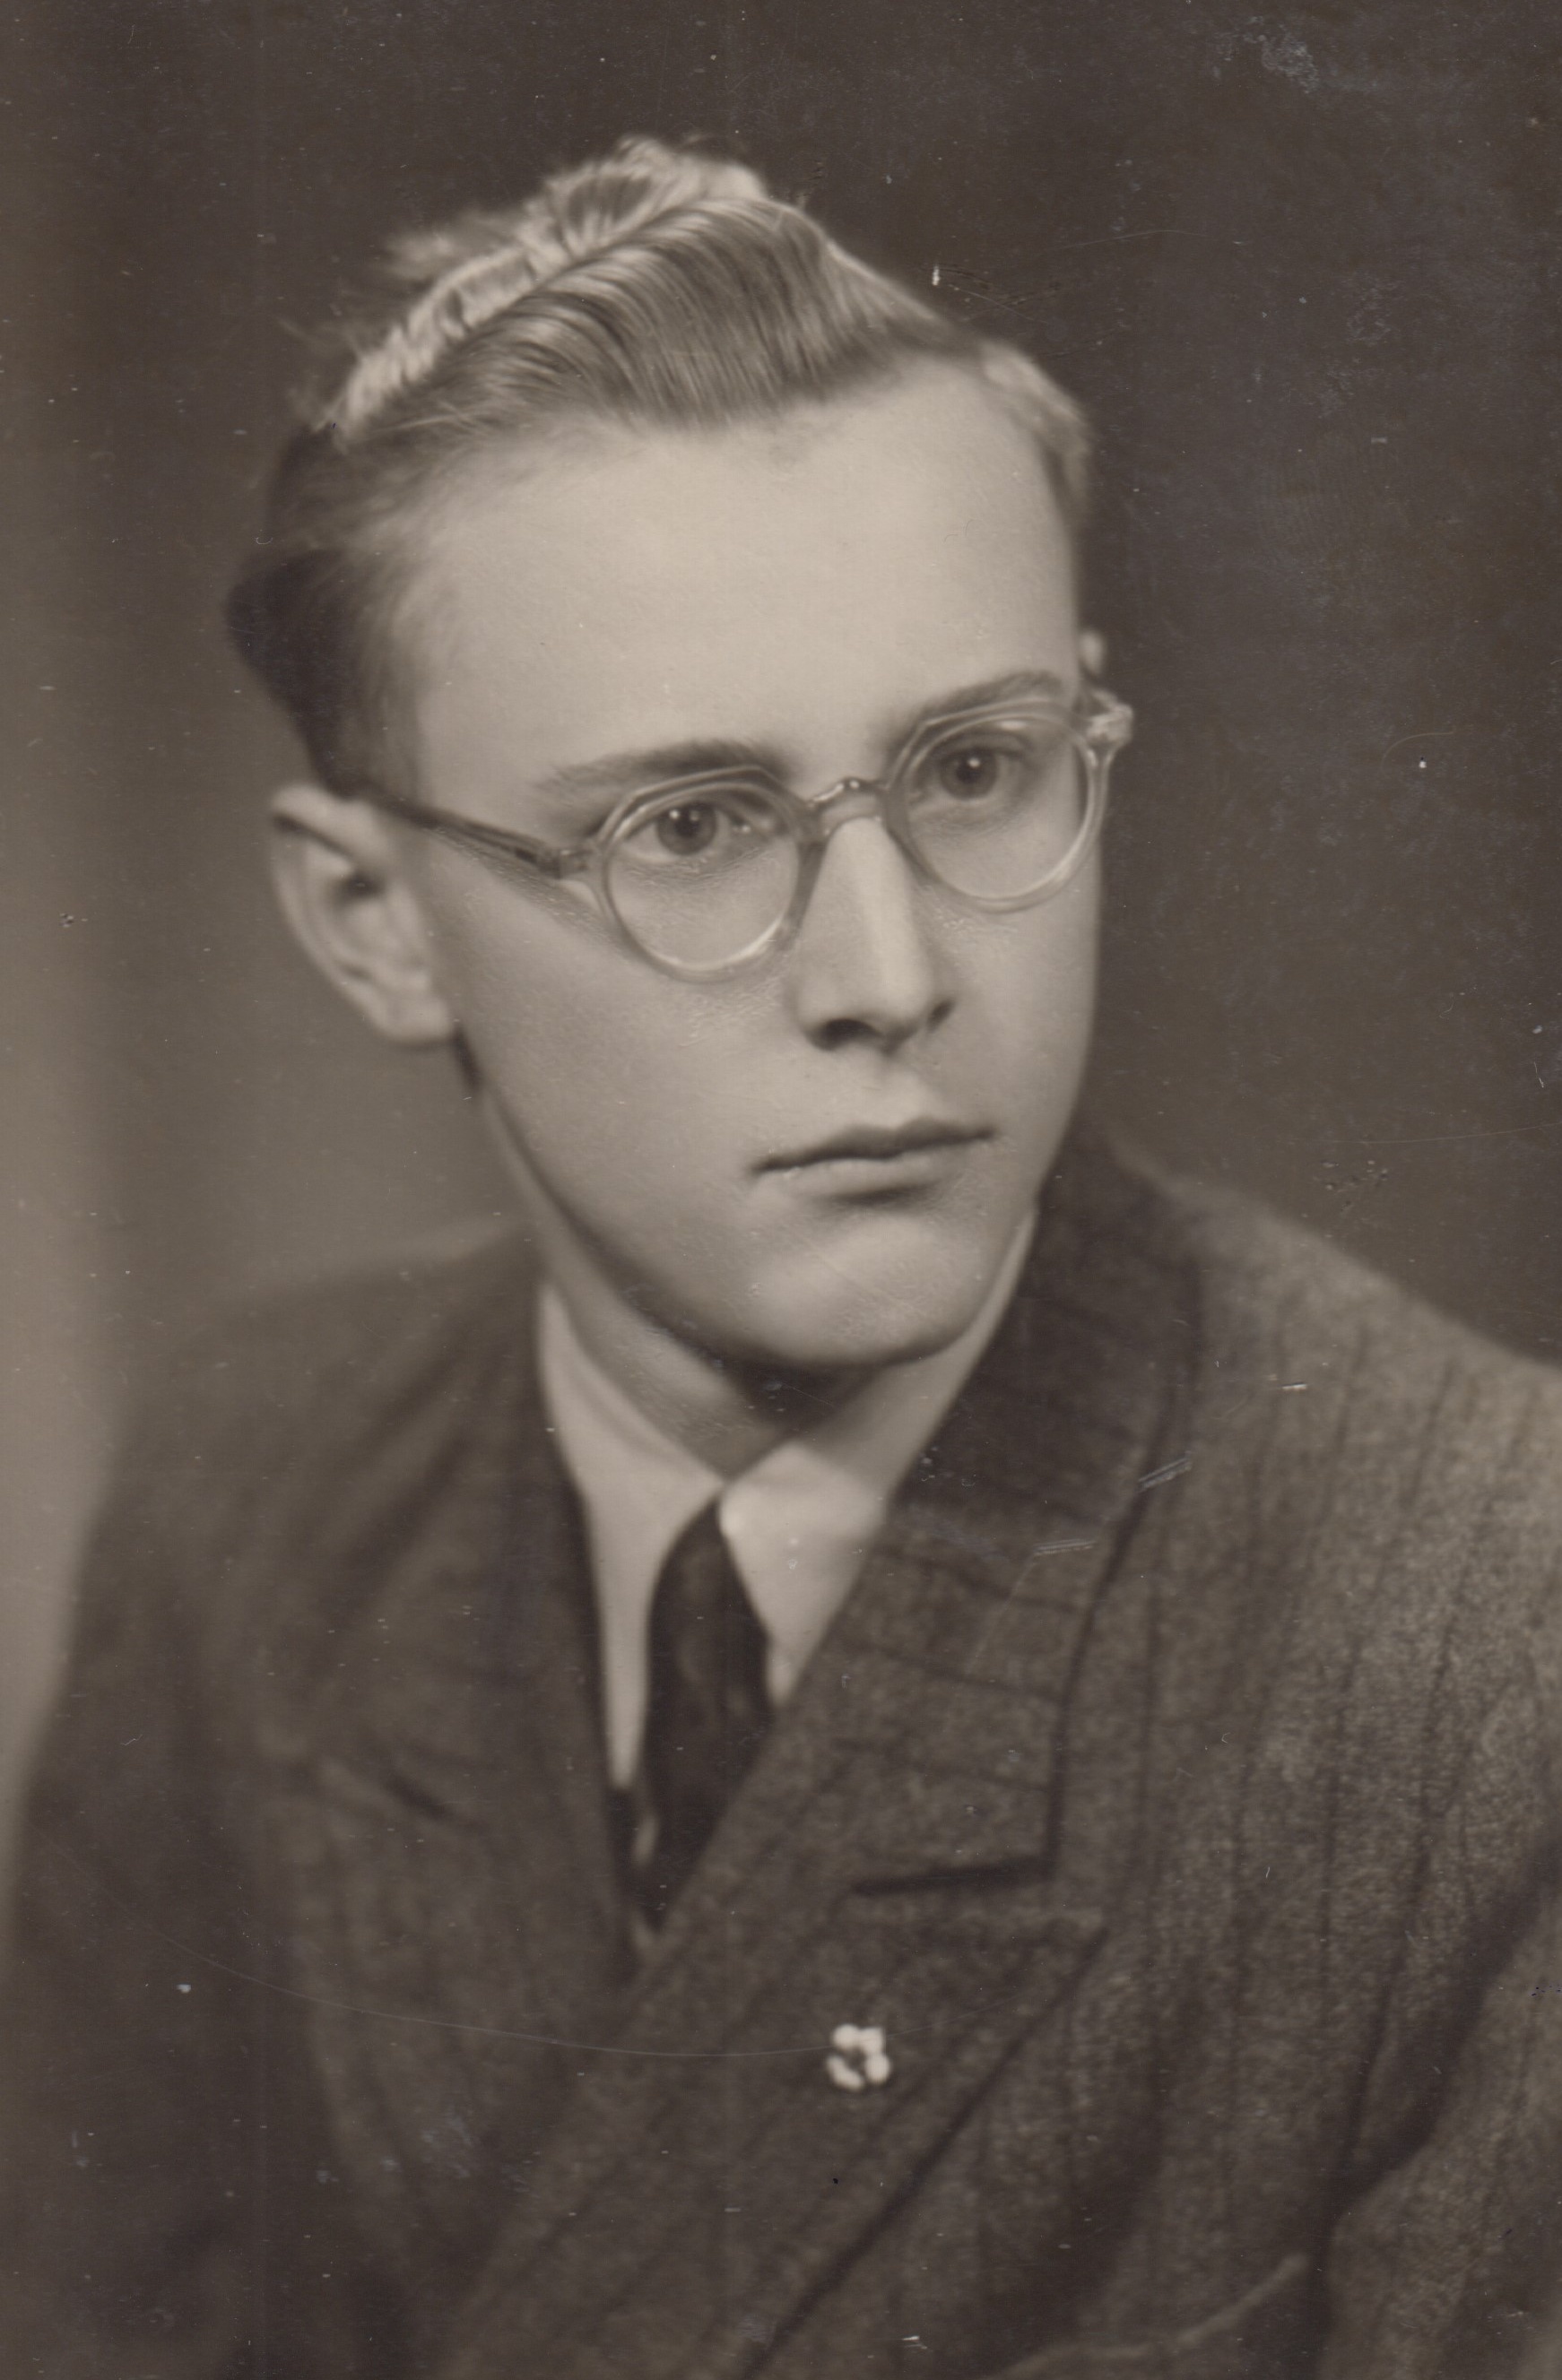 Ervín Reegen in 1948